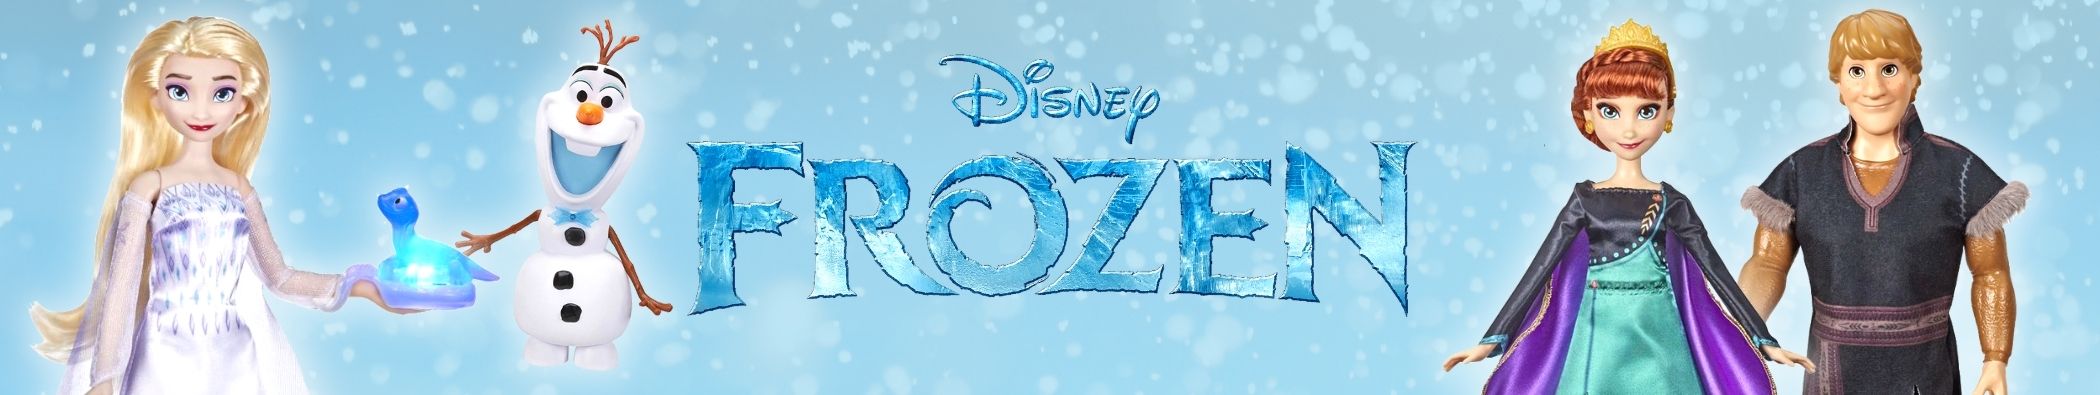 Jocs de taula Frozen